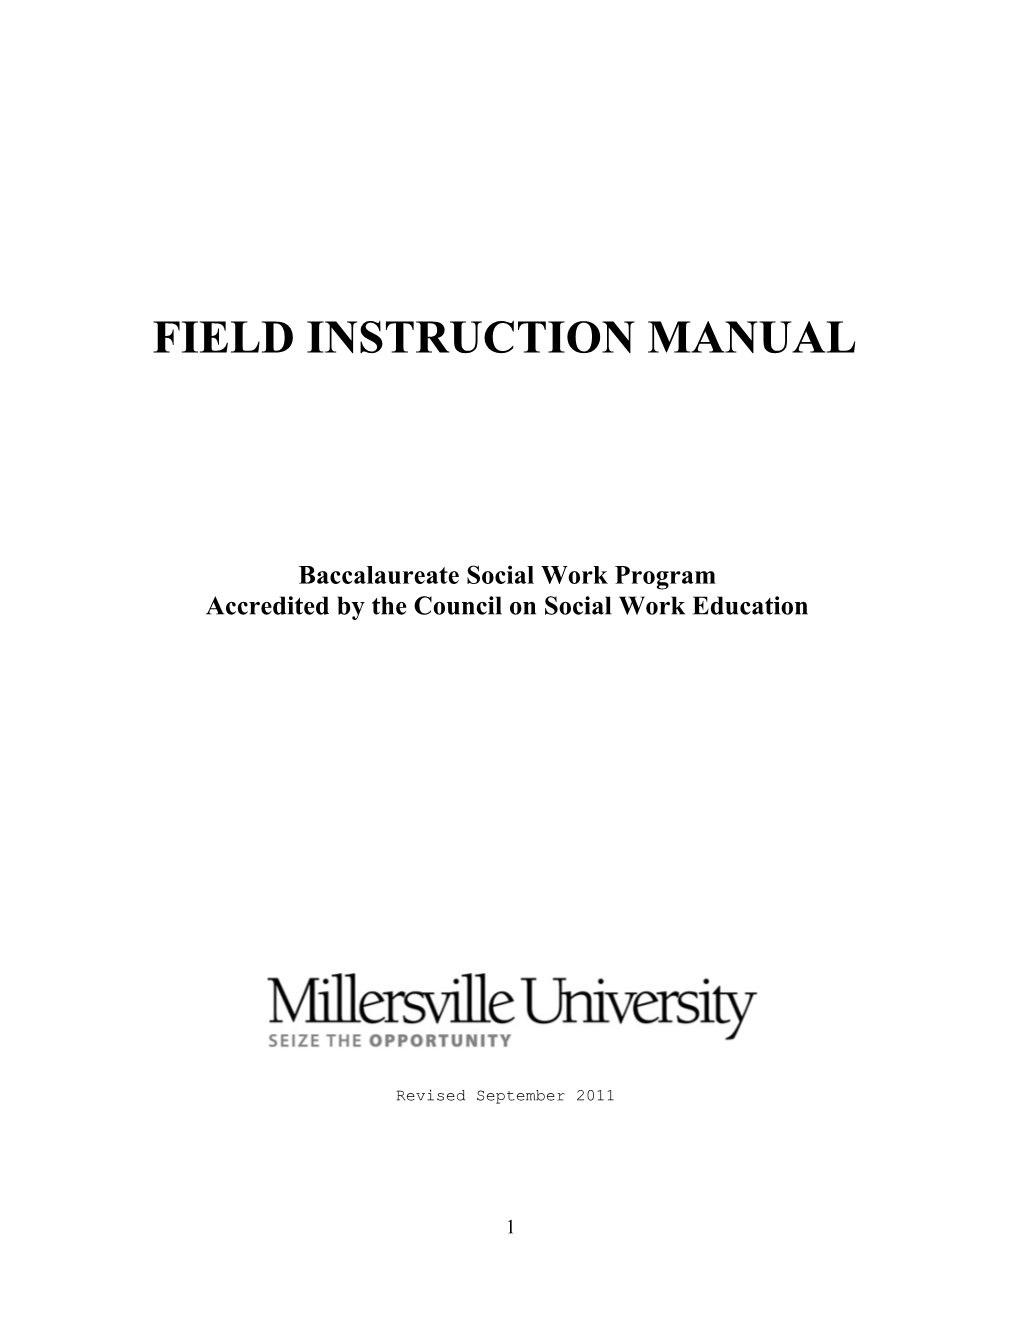 Field Instruction Manual